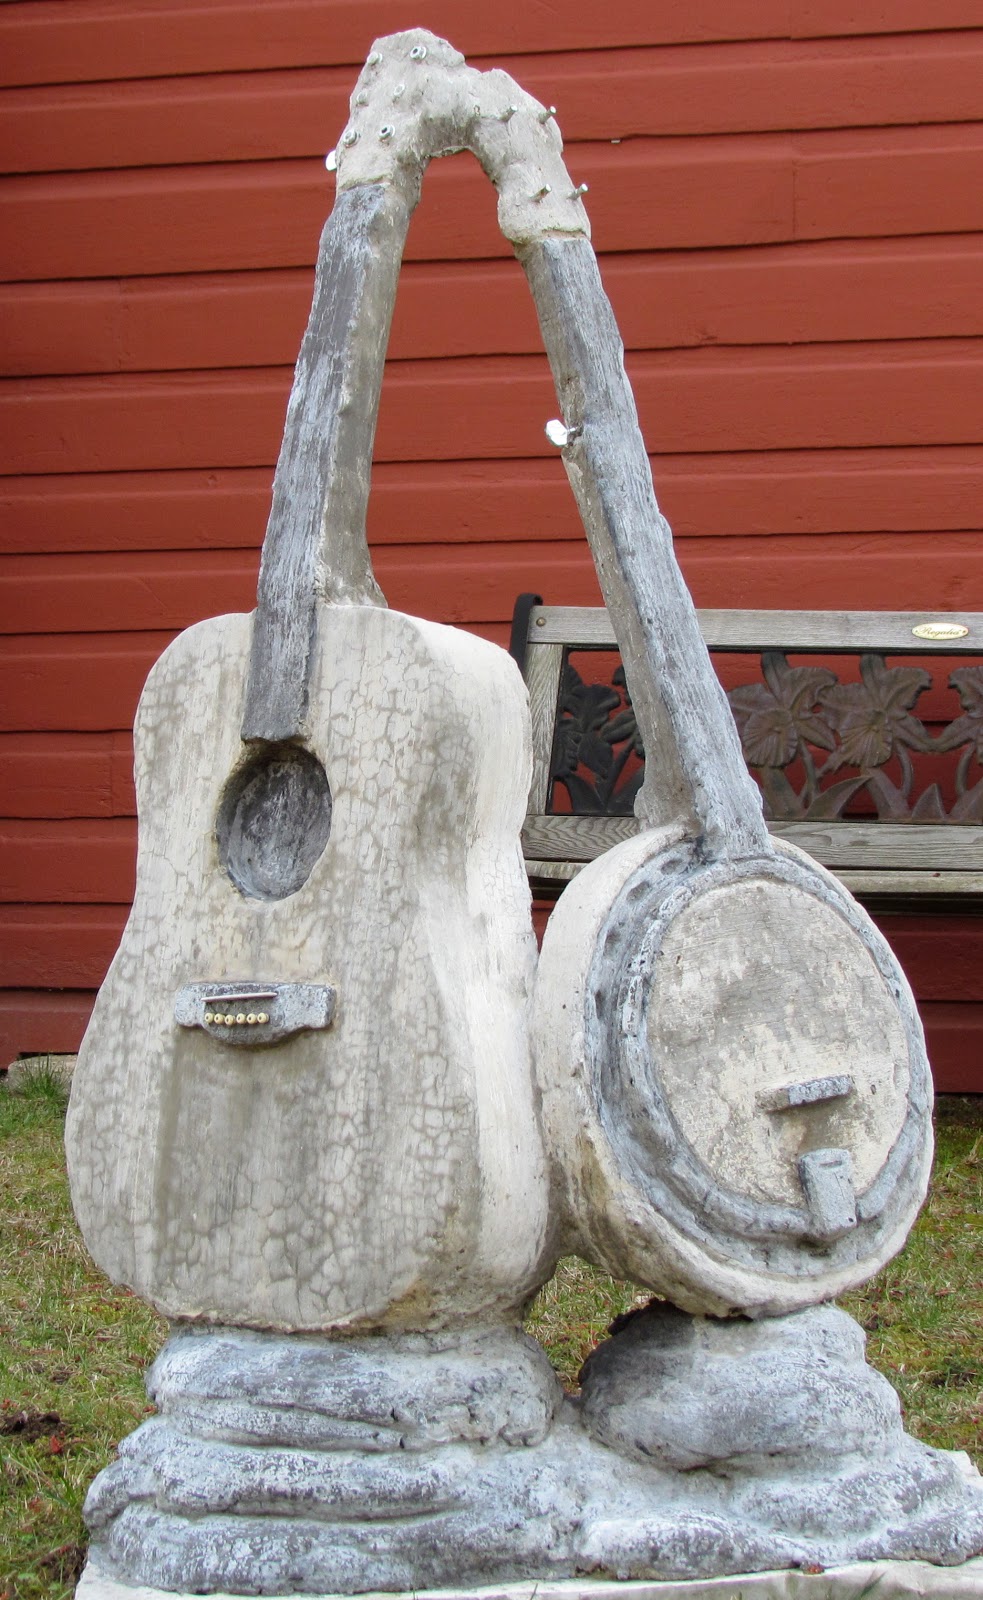 Bucks County Folk Music Shop | 40 S Sand Rd, New Britain, PA 18901 | Phone: (215) 345-0616